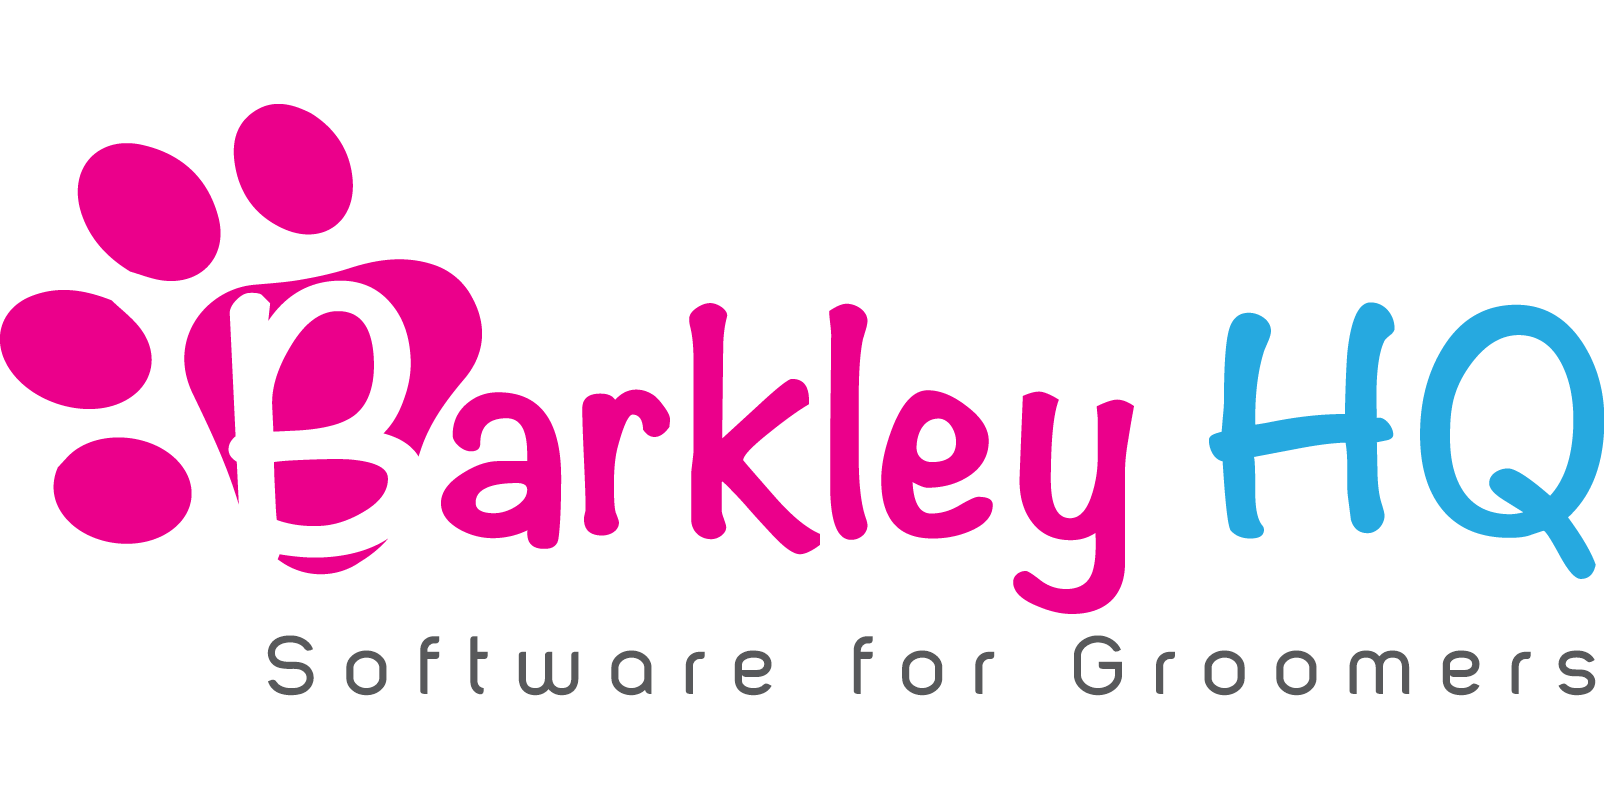 Barkley HQ - A Brilliant SaaS Company Helping Brilliant Pet Groomers 